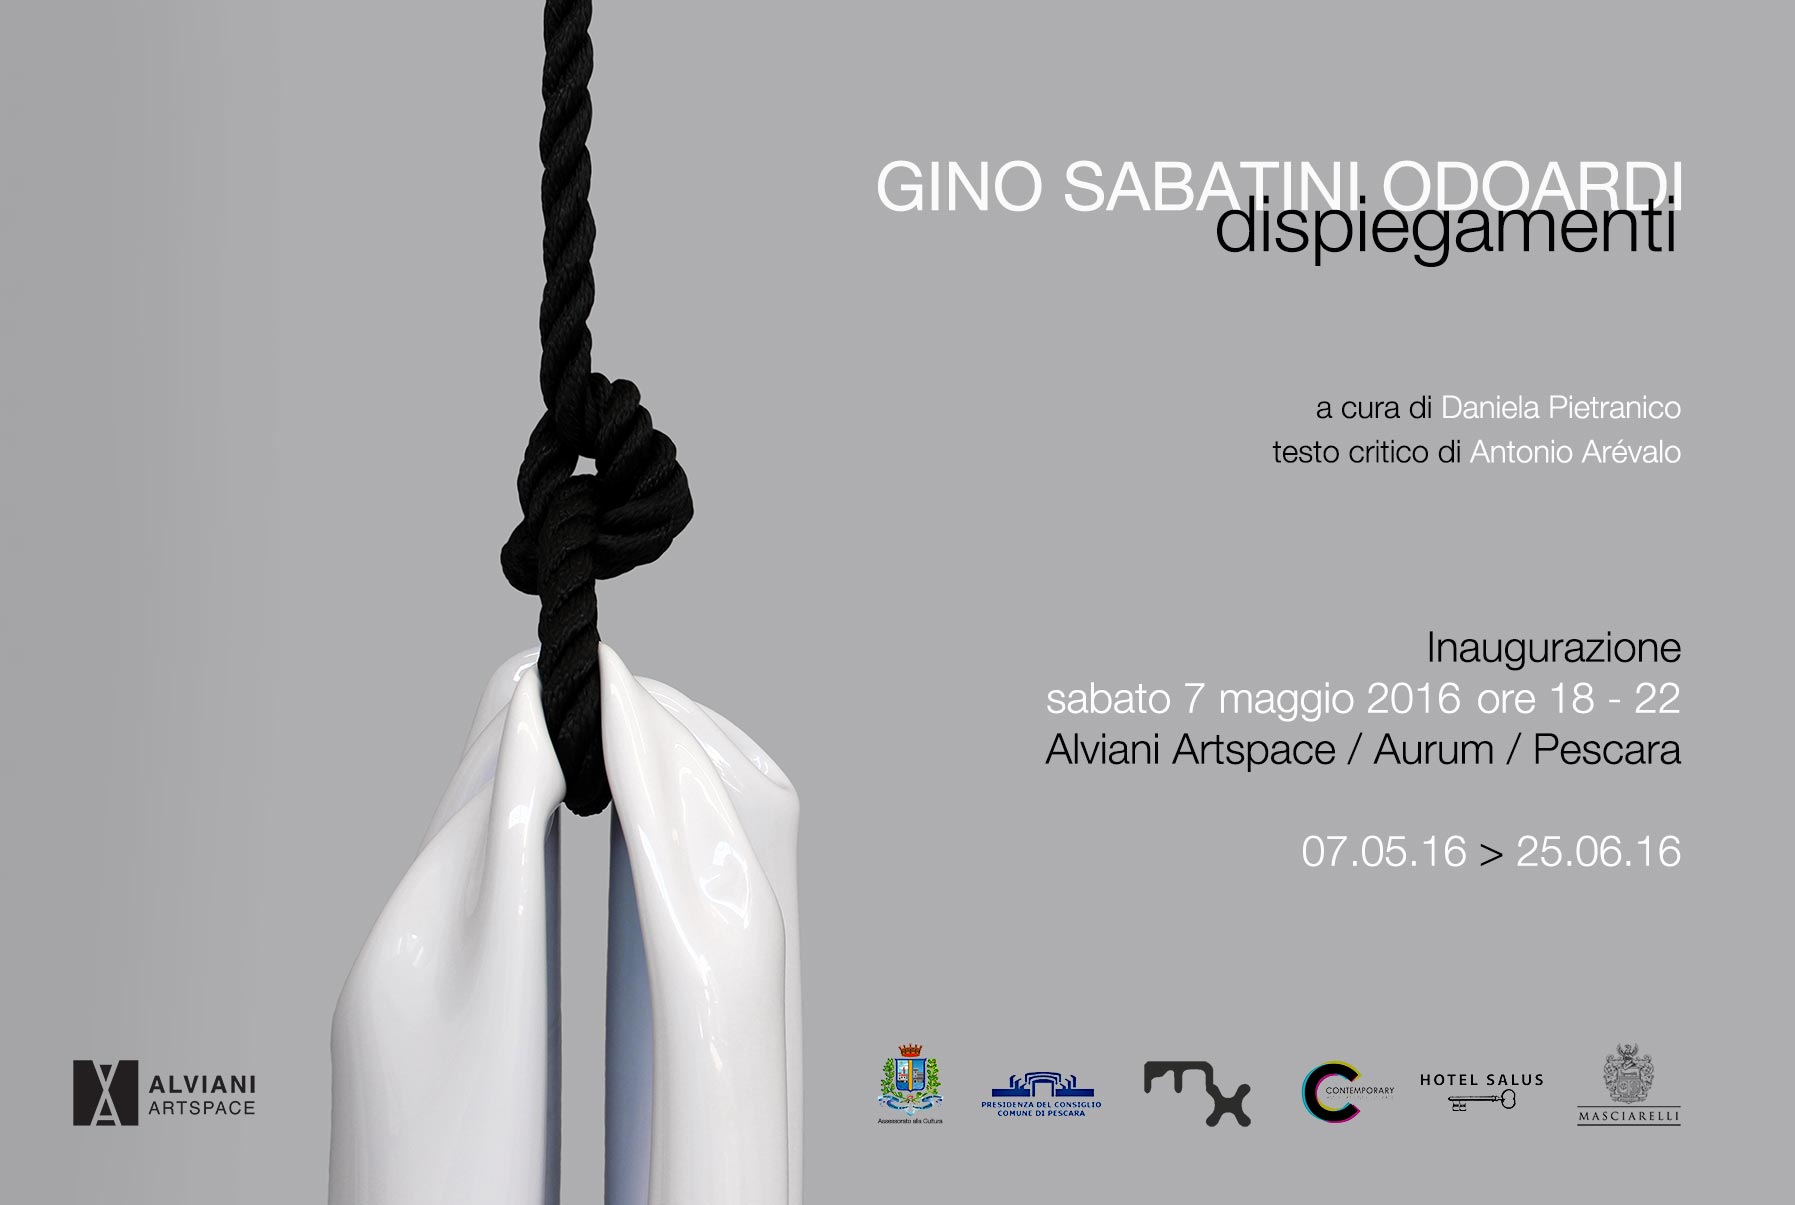 Gino Sabatini Odoardi – Dispiegamenti